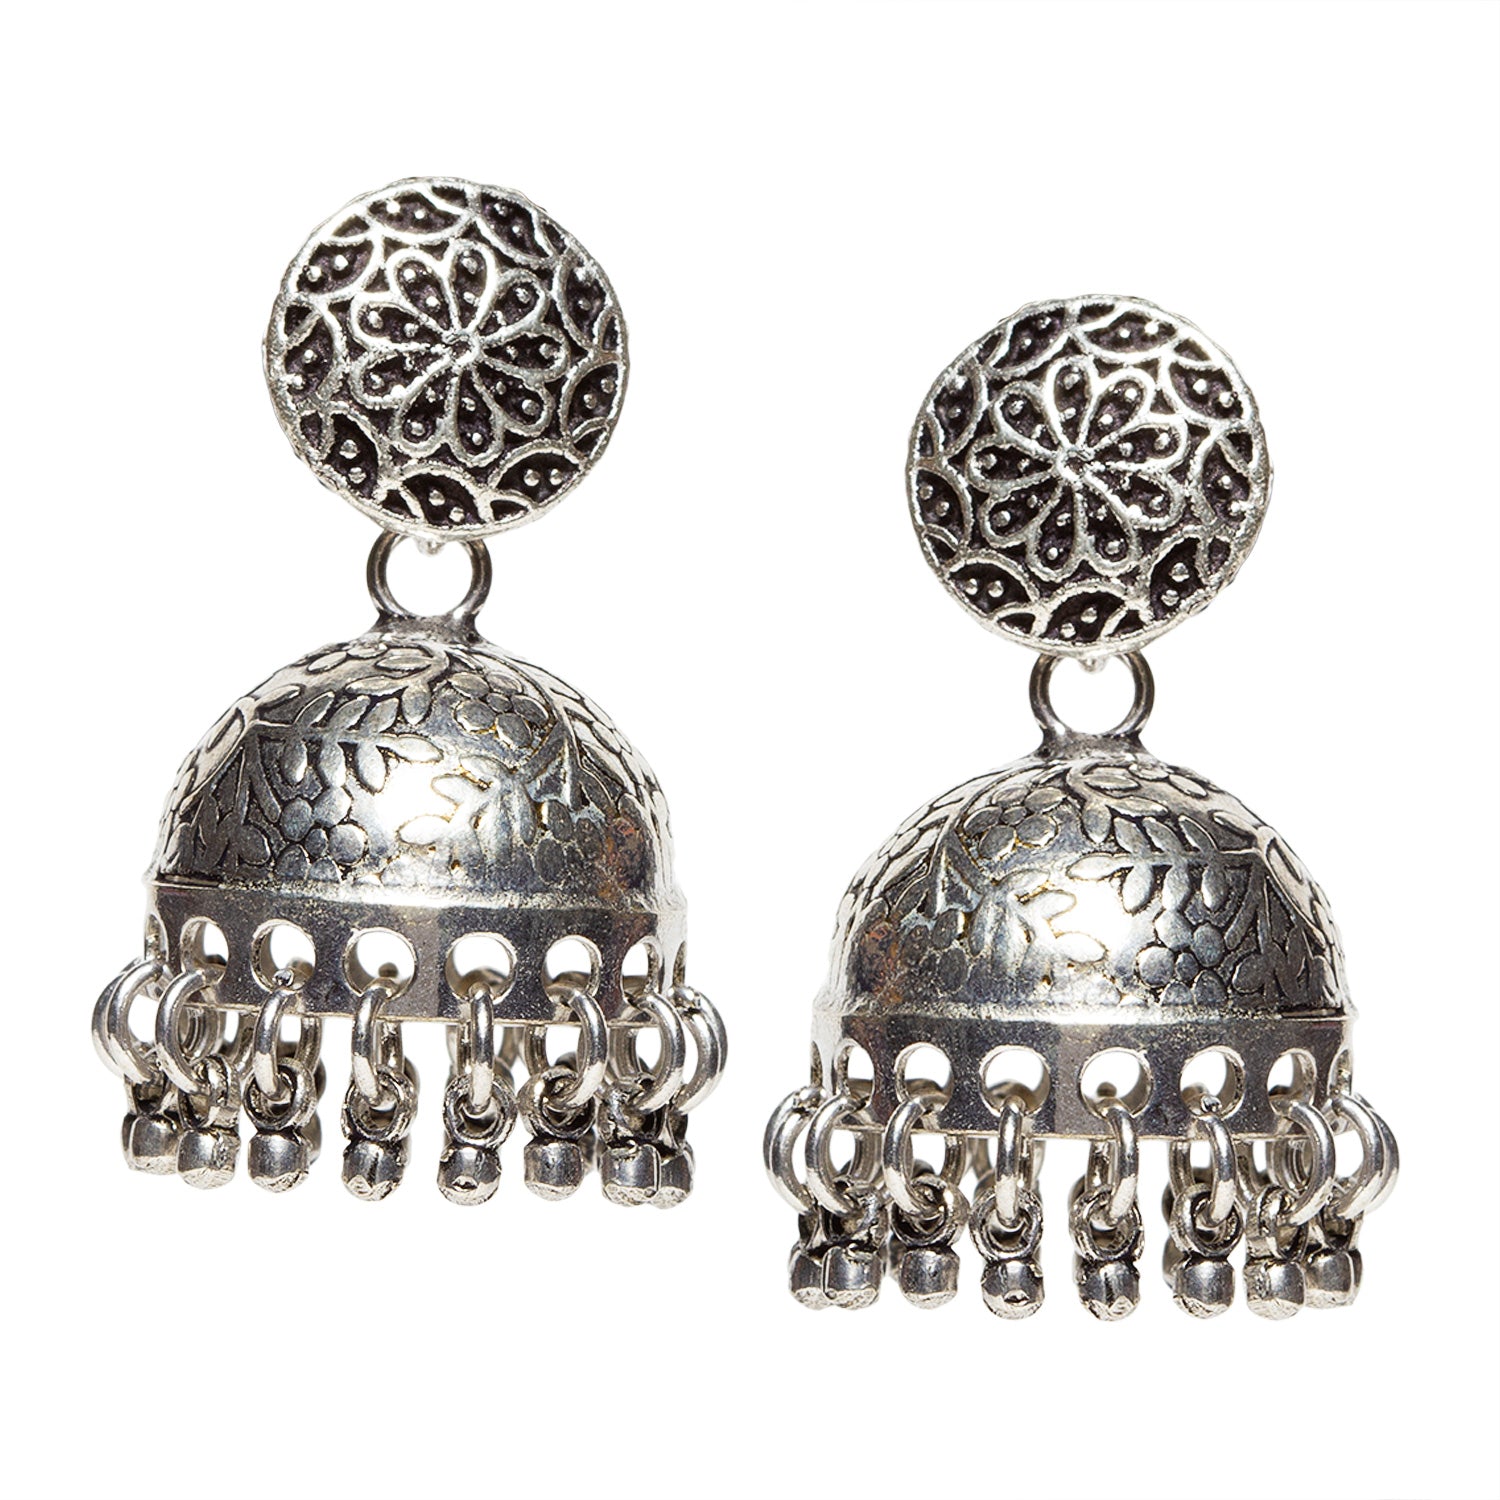 Buy Bindhani Women's Silver-Plated Small Oxidised Earrings